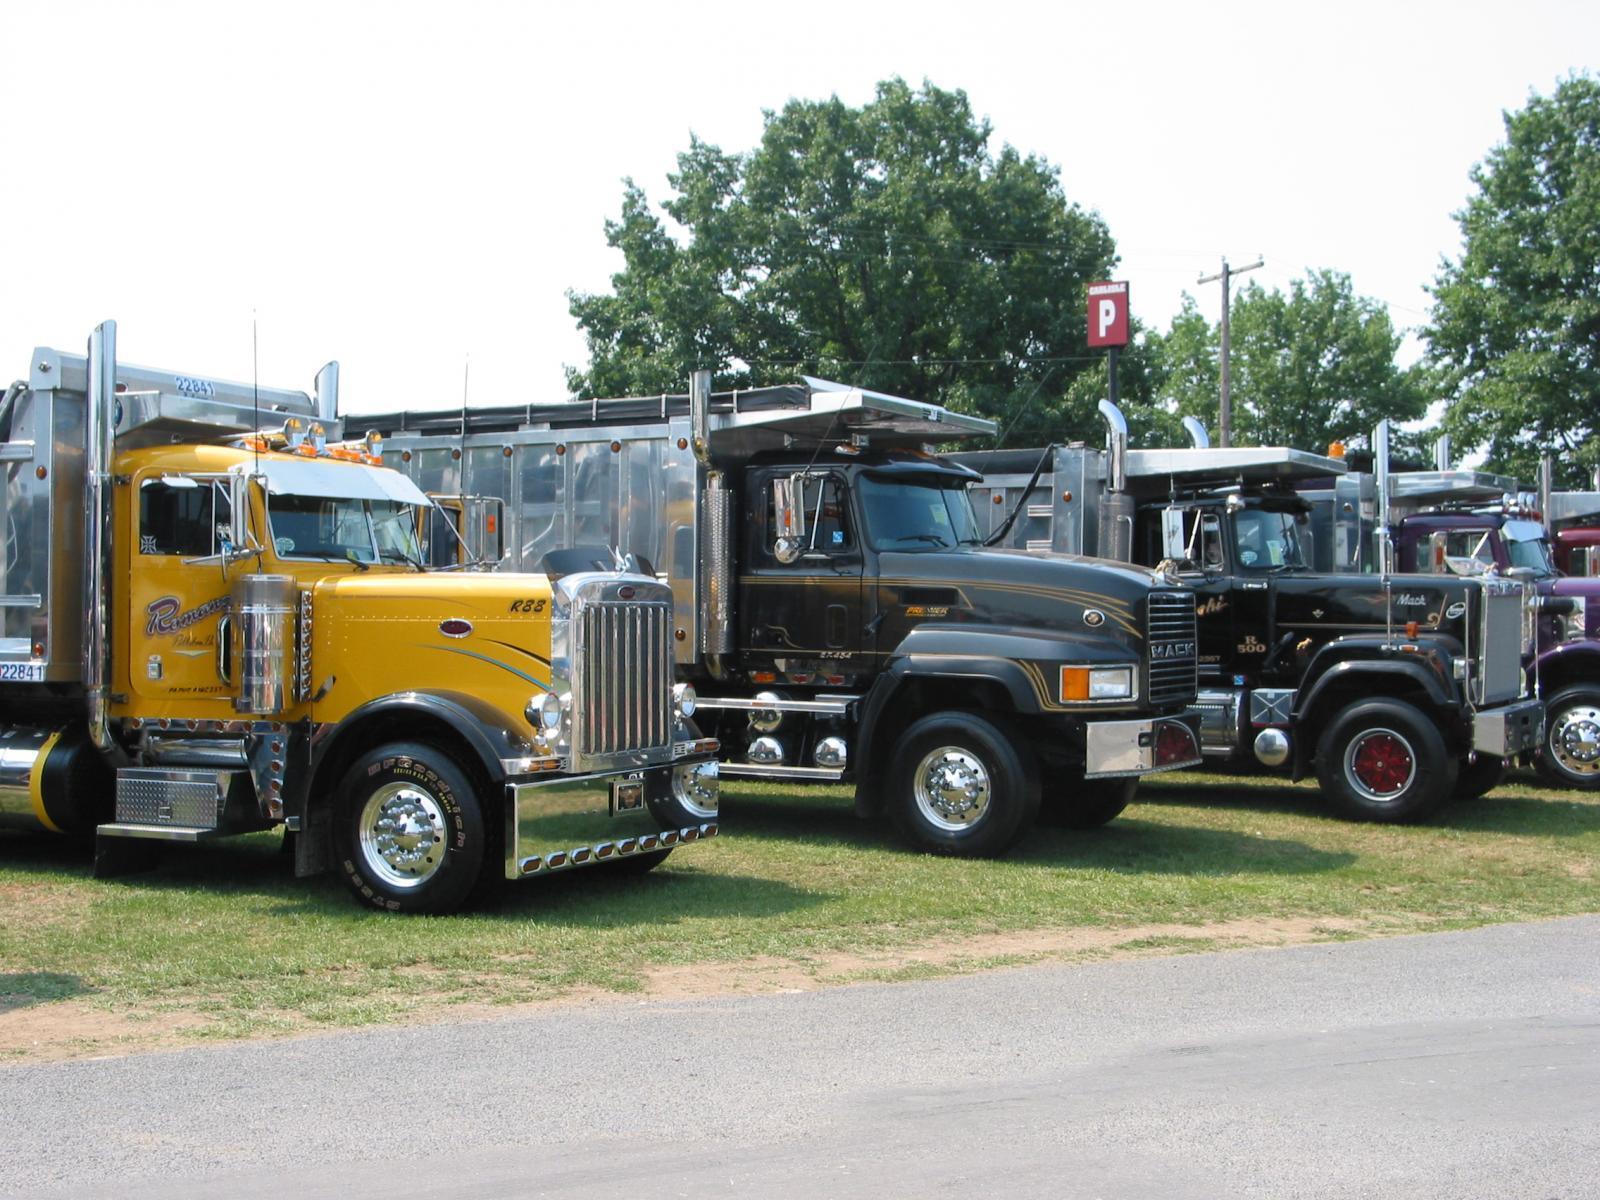 Carlisle Truck show